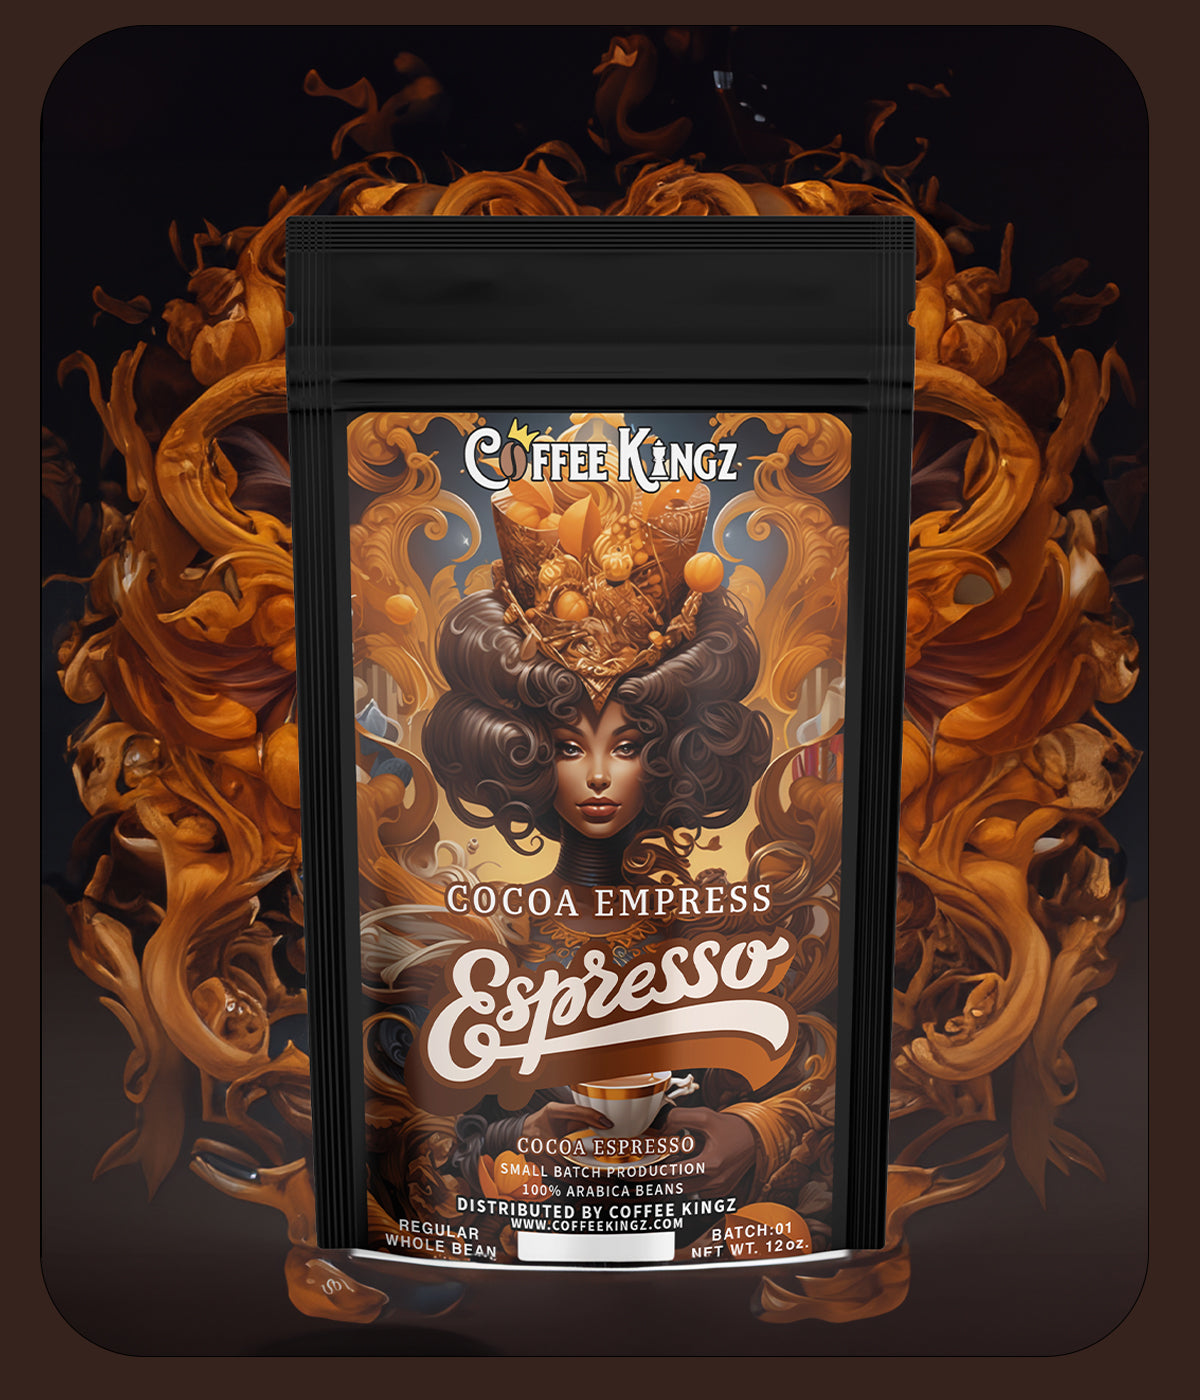 Cocoa Empress Espresso branding: Freshly ground & roasted on order. Artisanal coffee emphasizing freshness & customization.